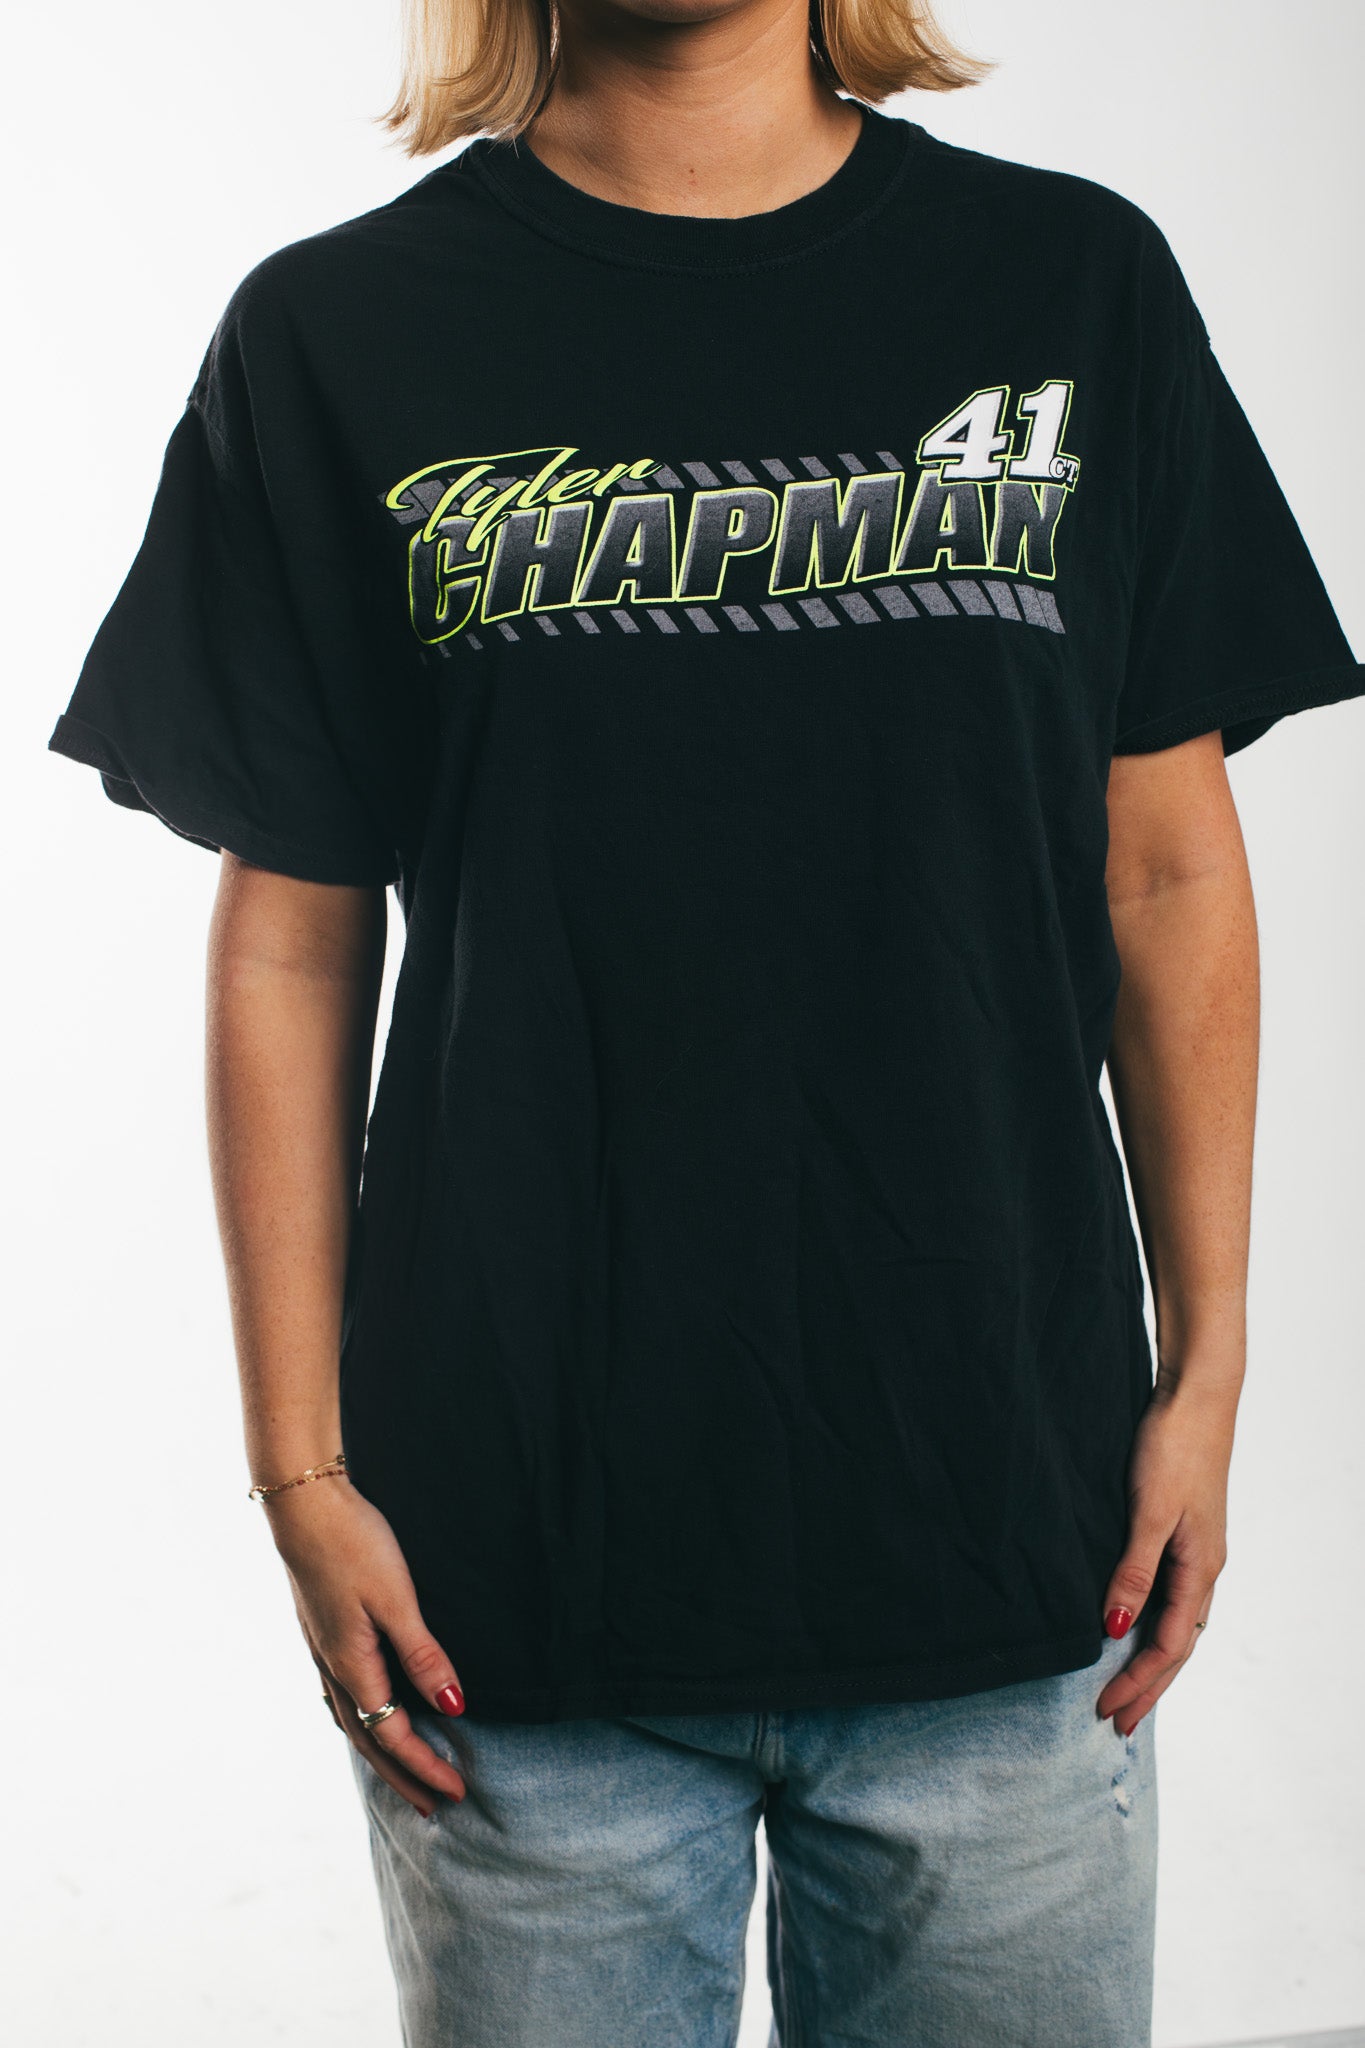 Tyler Chapman - T-Shirt (M)